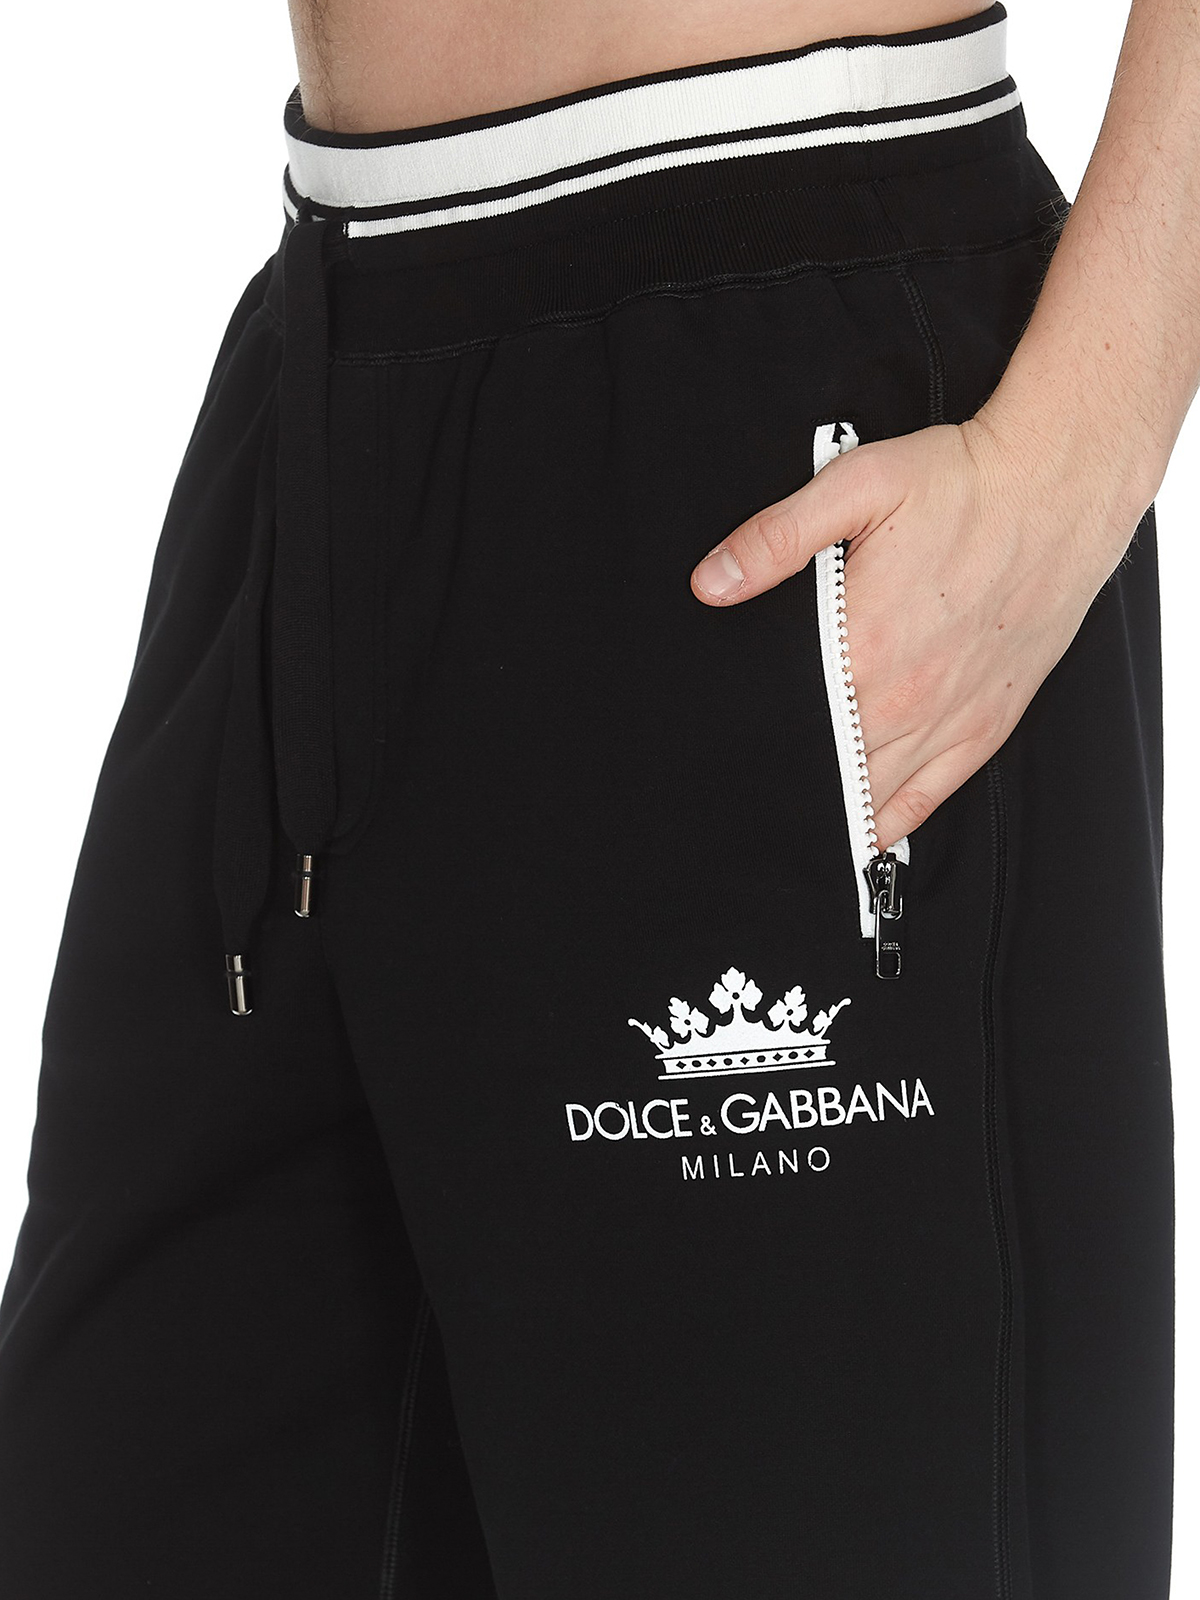 dolce and gabbana jogging pants